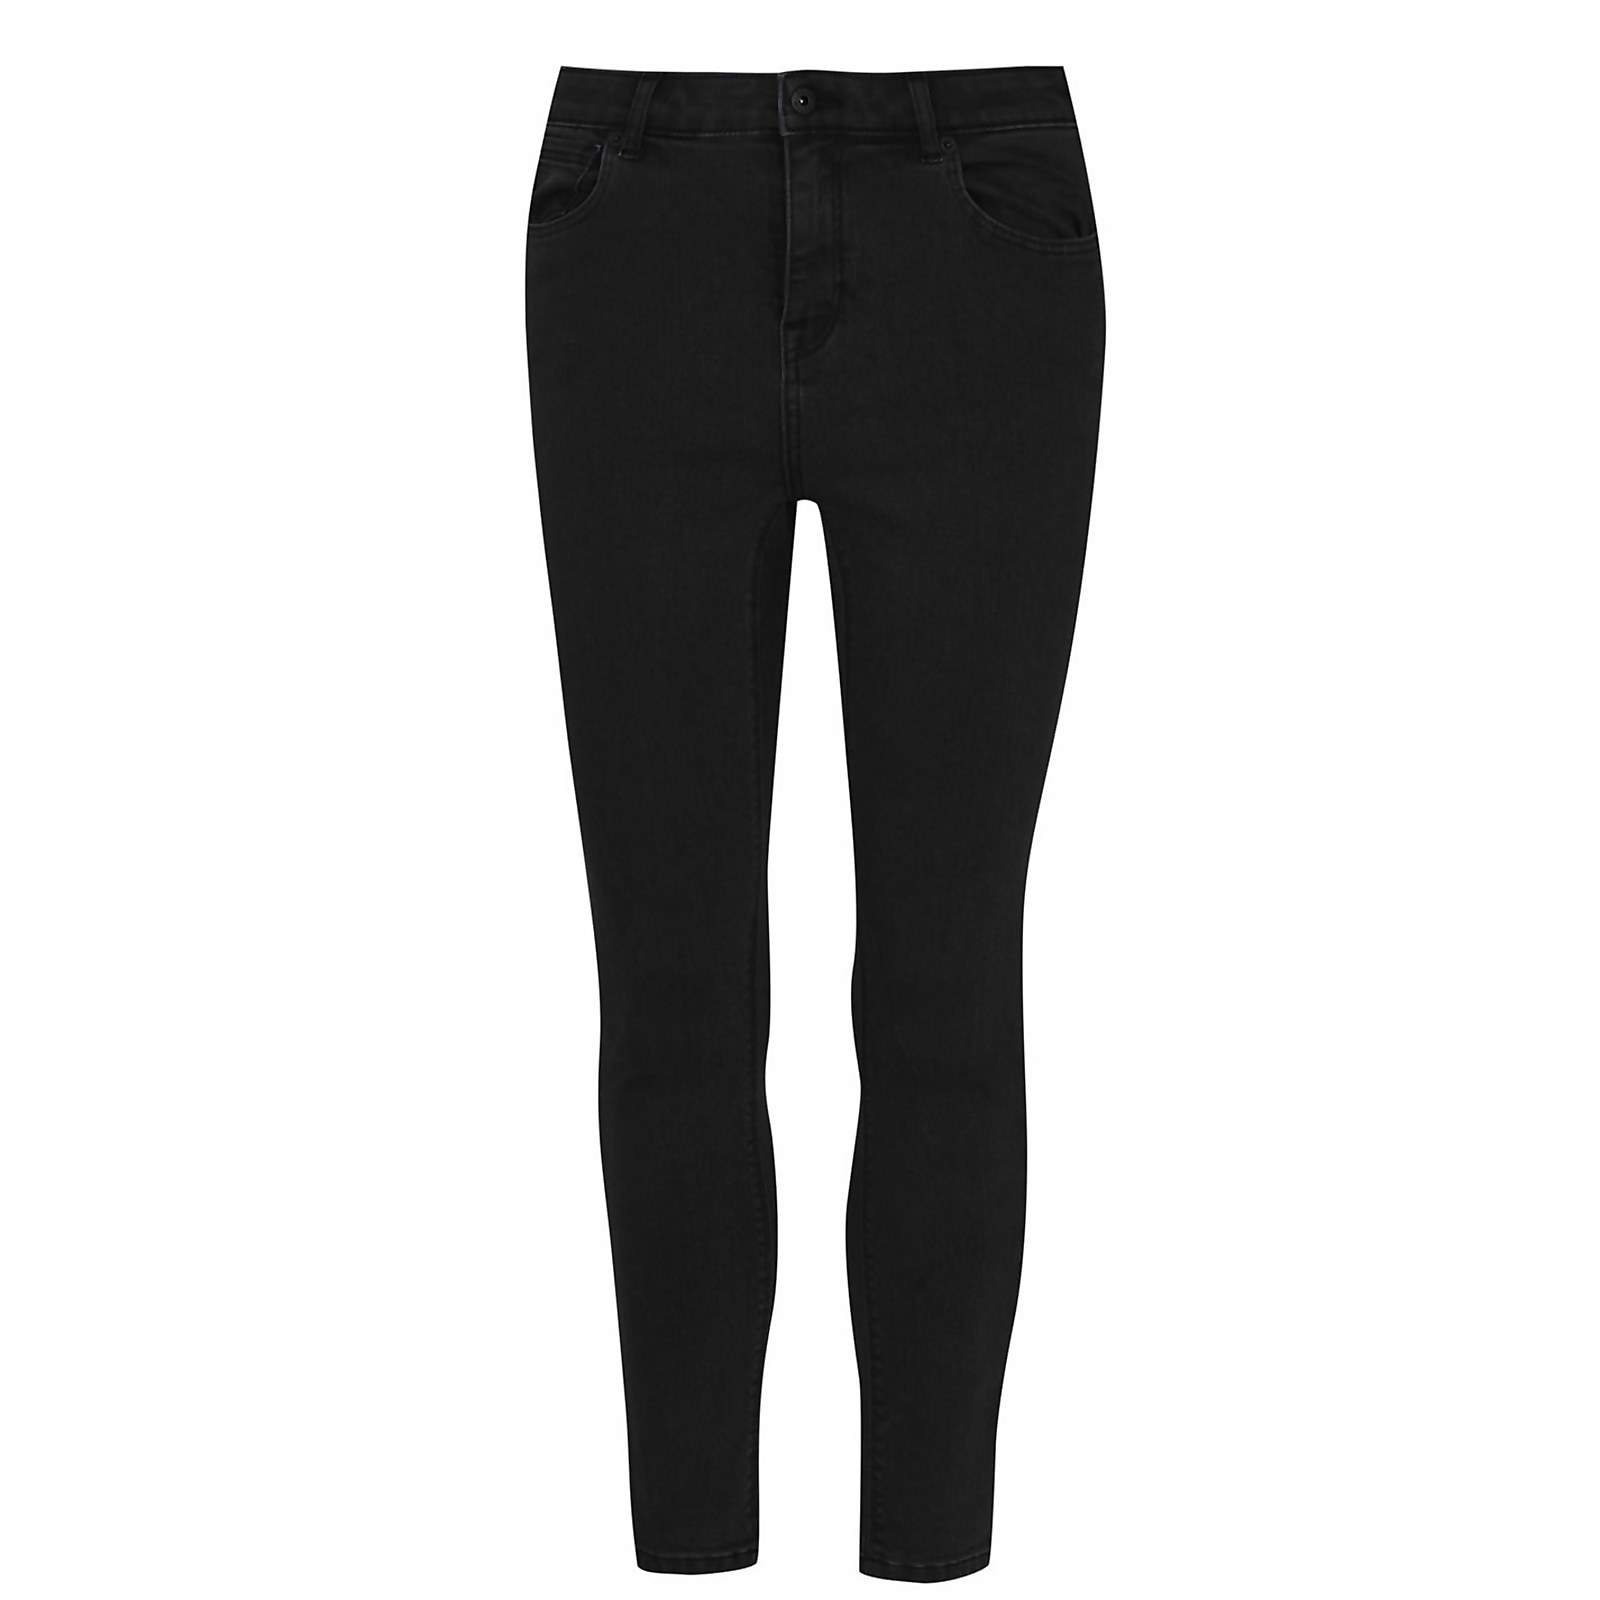 Sancomb Crop Jeans - Washed Black - 28 L26